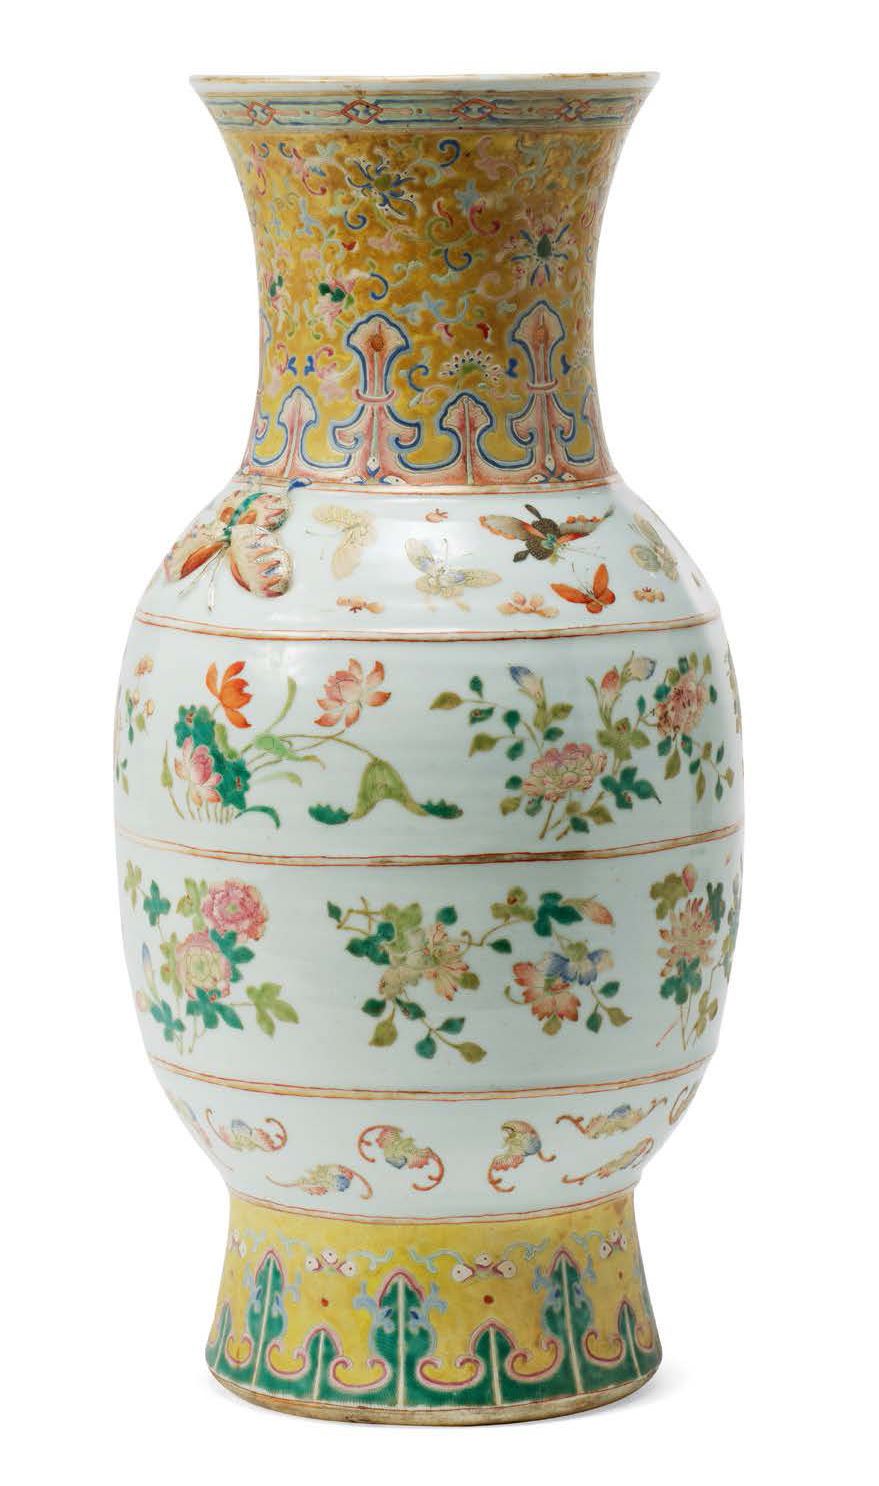 CHINE DYNASTIE QING, FIN DU XIXe SIÈCLE Balusterförmige Vase aus Porzellan mit G&hellip;